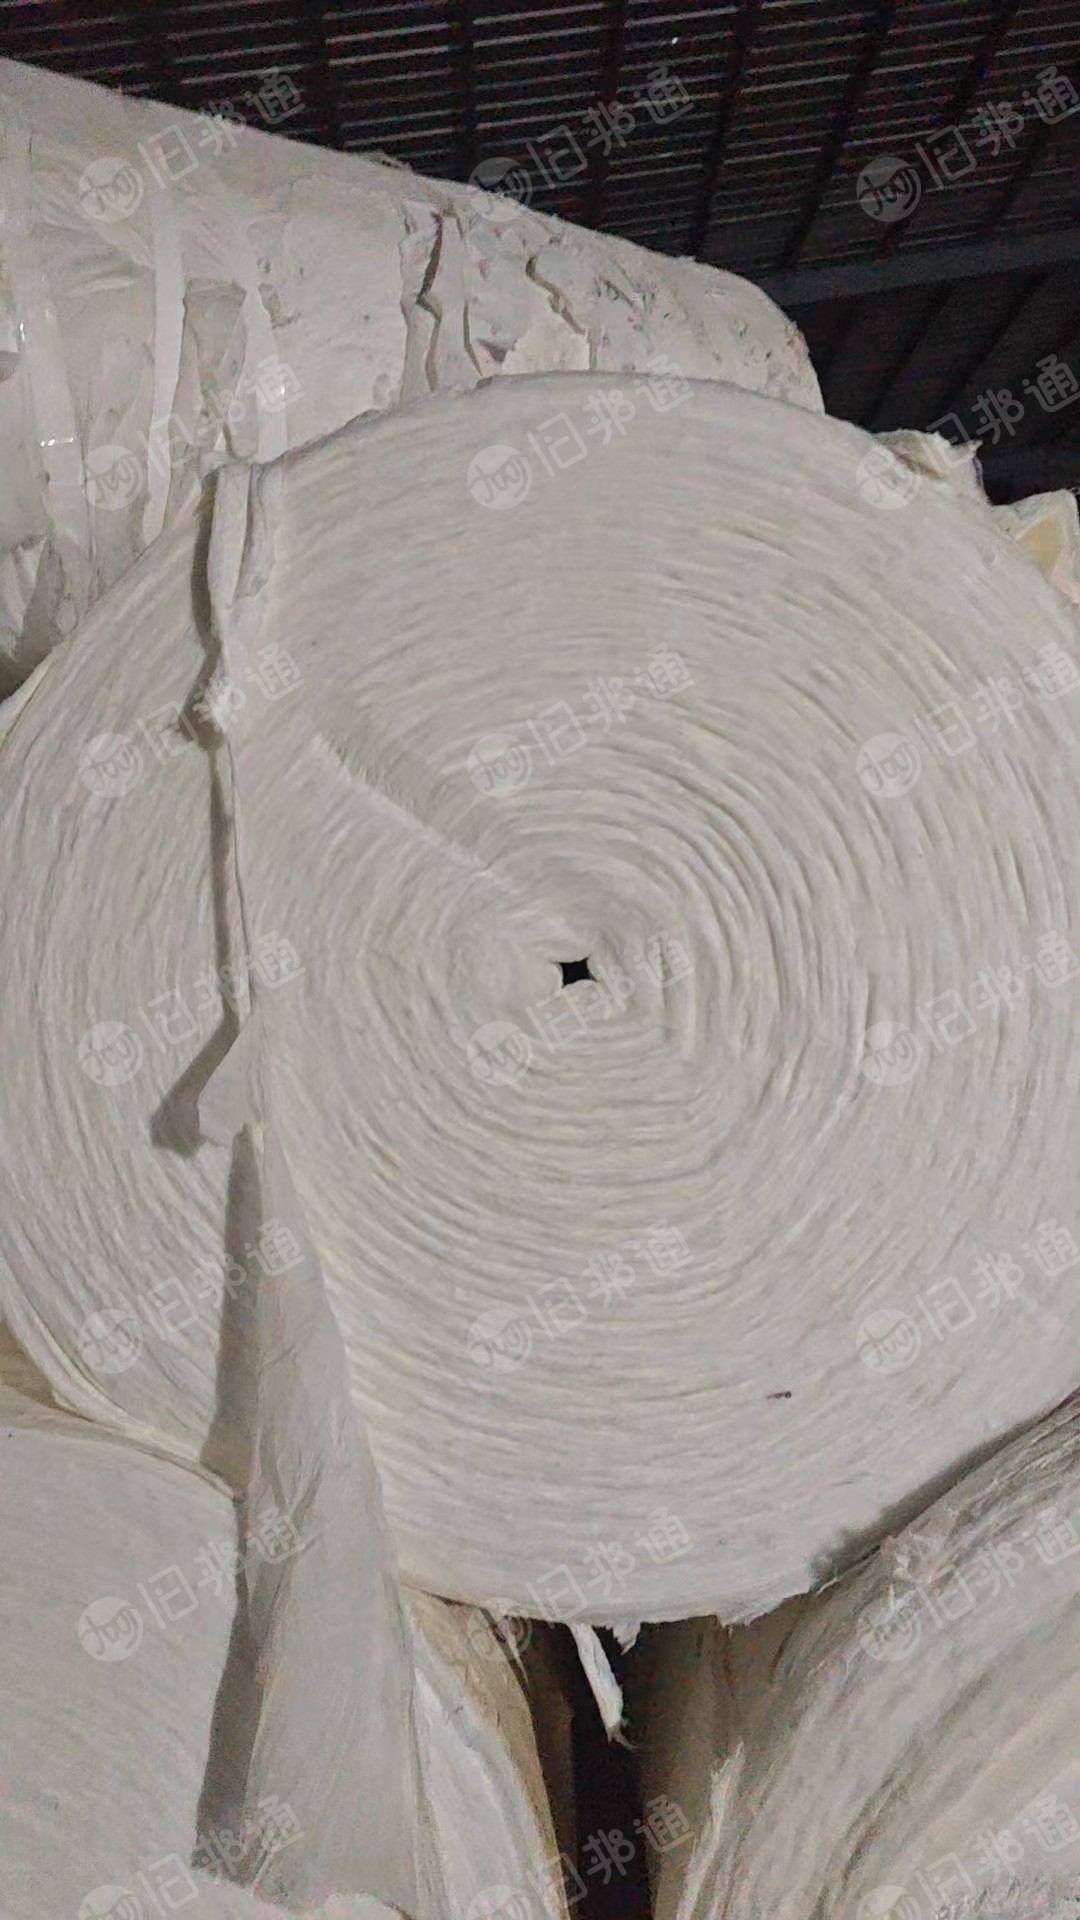 PP木浆卷材料17吨出售，其中有2吨左右纯PP无纺布